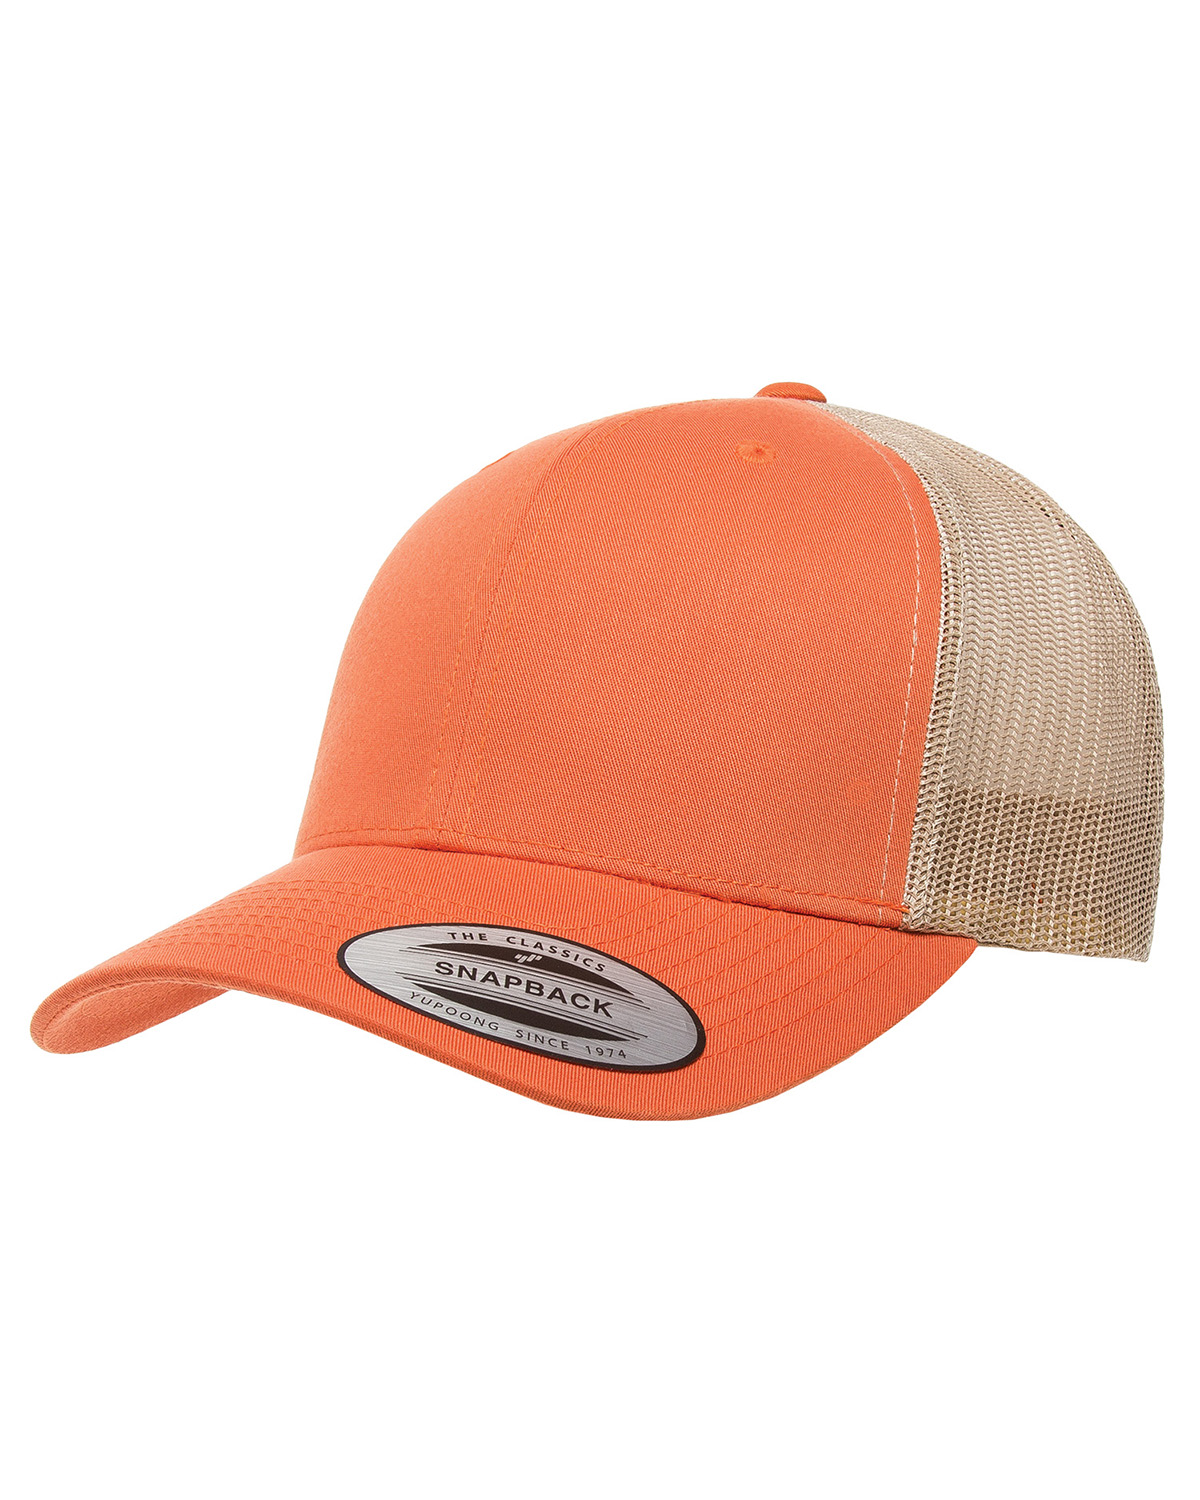 Unisex Vintage Mesh Cap Snapback Classic Trucker Hat